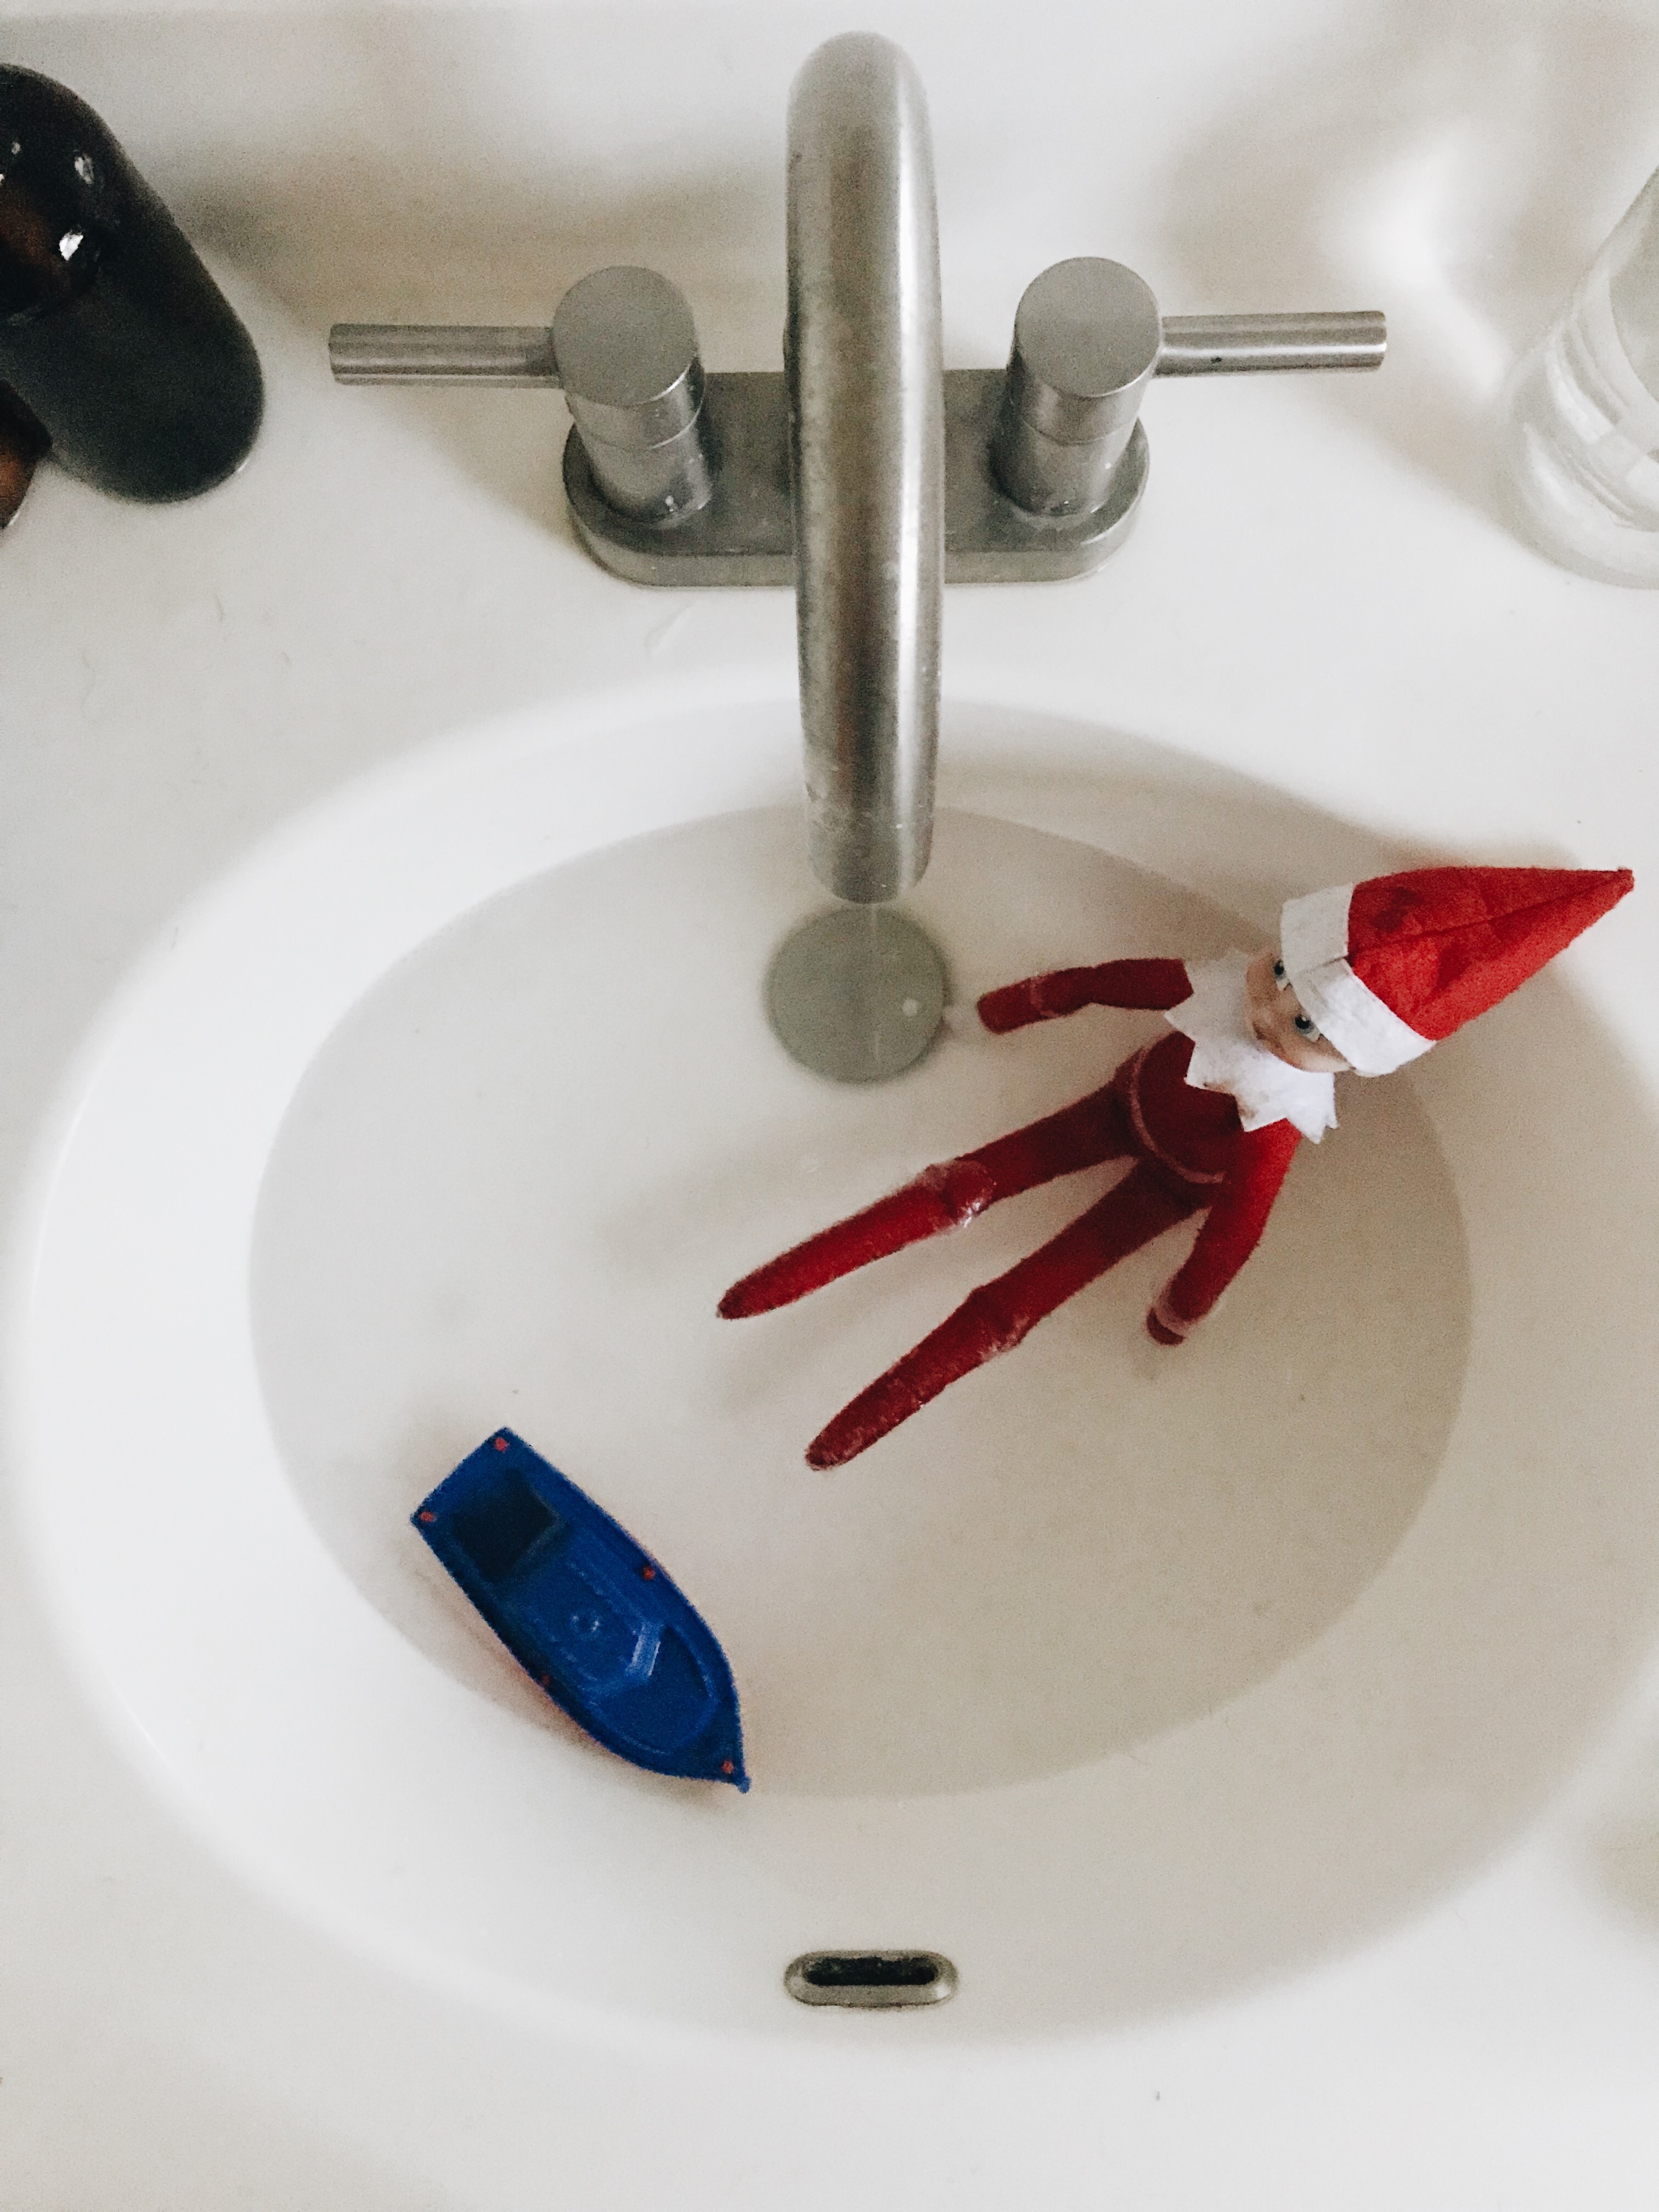 Elf in a sink